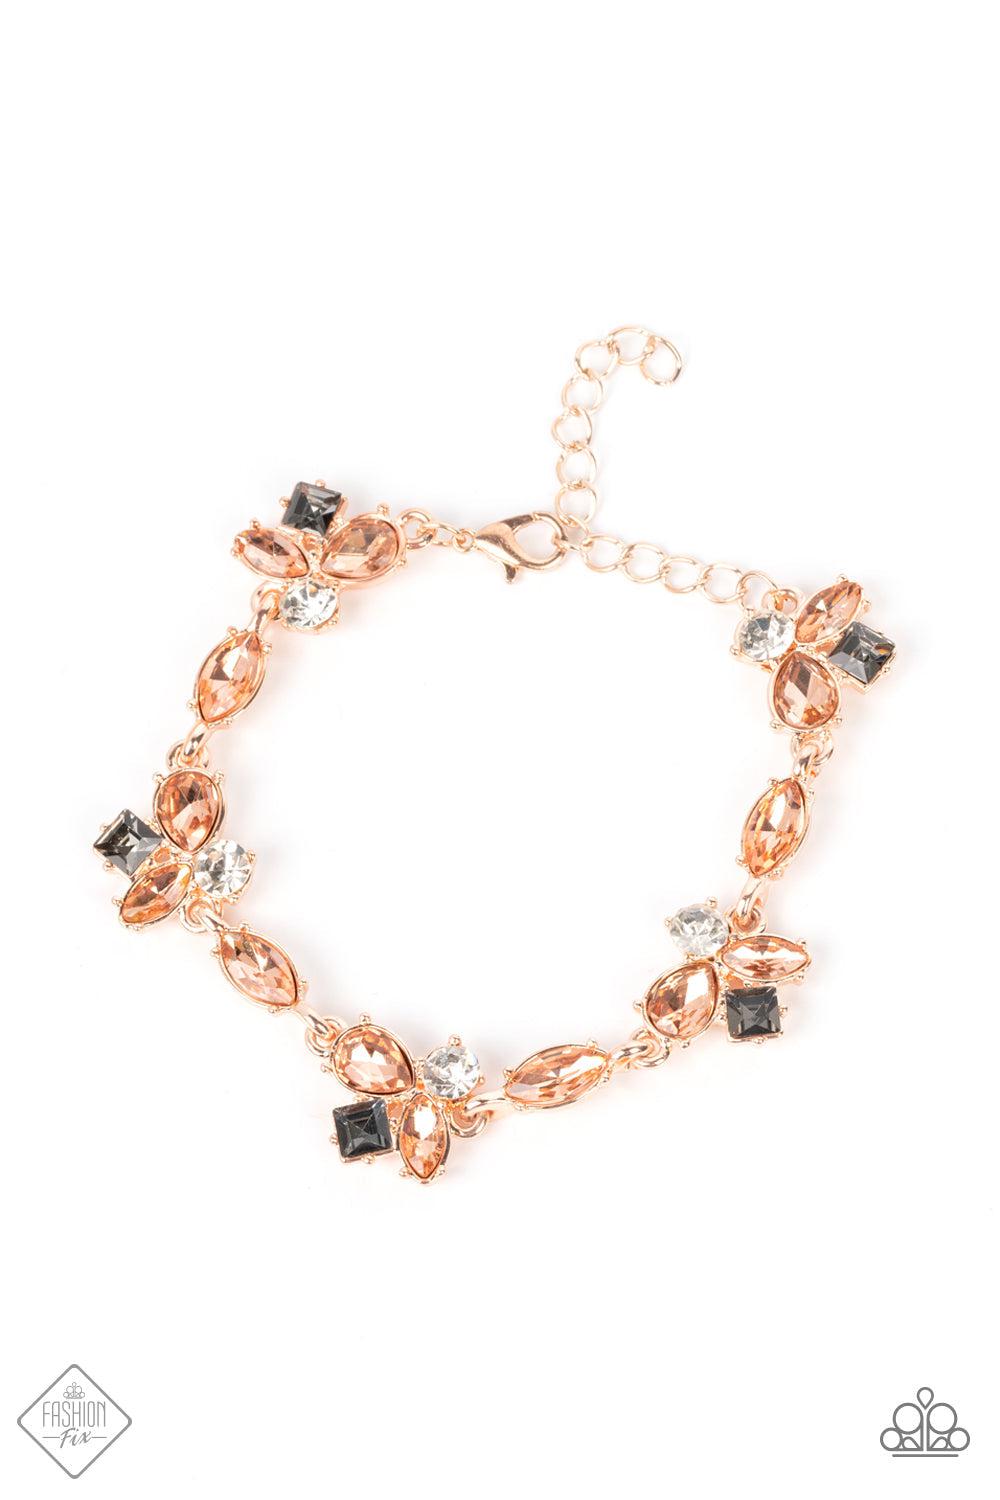 Colorful Captivation Rose Gold & Smoky Rhinestone Bracelet - Paparazzi Accessories- lightbox - CarasShop.com - $5 Jewelry by Cara Jewels